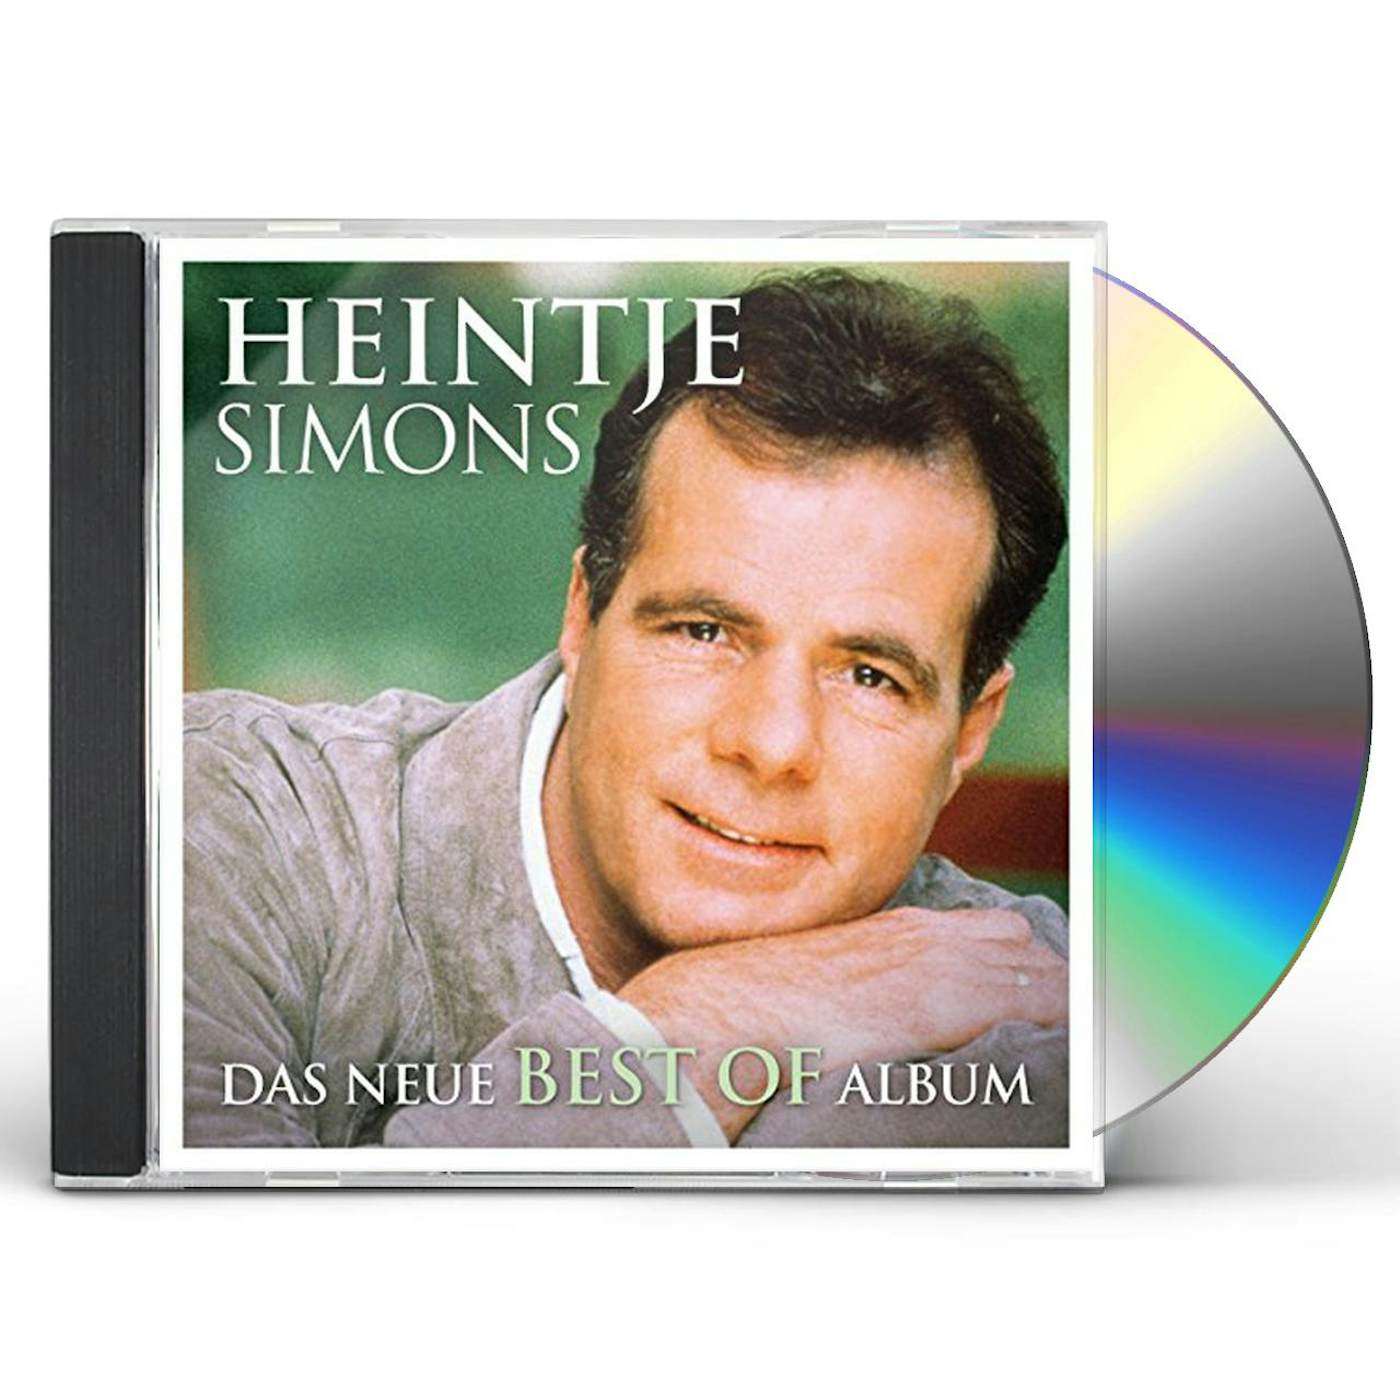 Heintje Simons DAS NEUE BEST OF ALBUM CD